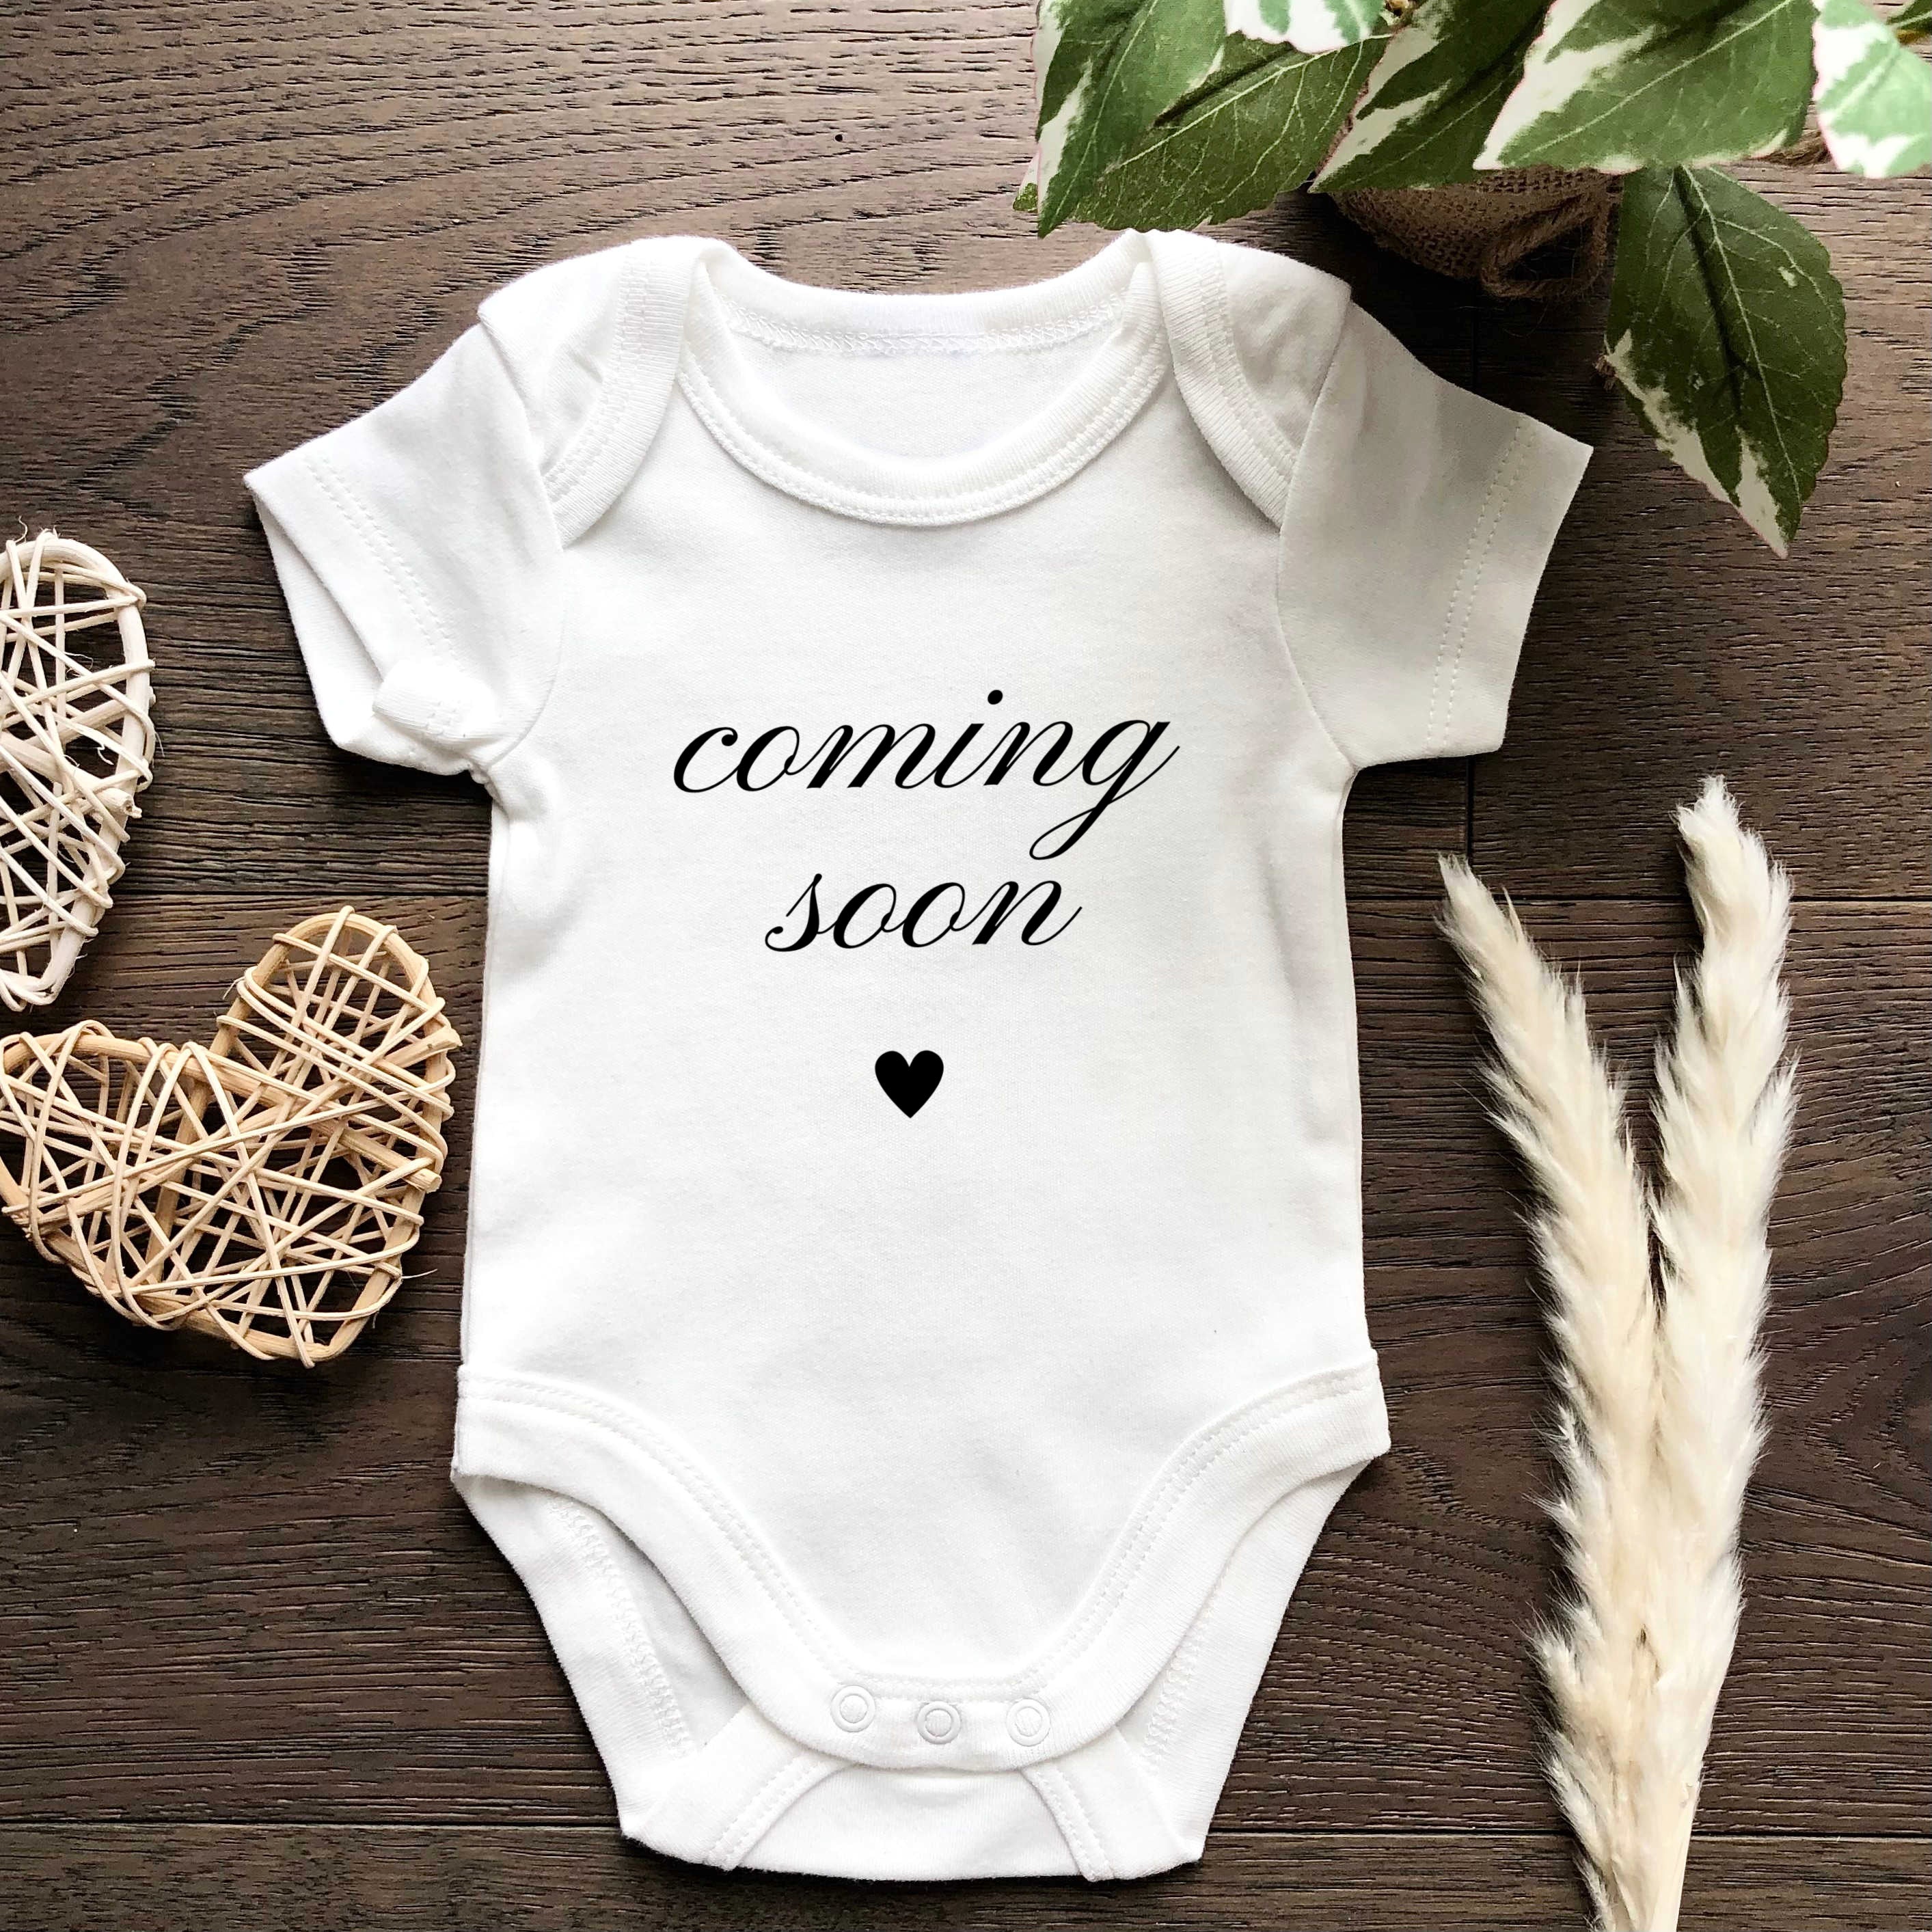 Coming Soon Baby Onesie: Custom Pregnancy Announcement